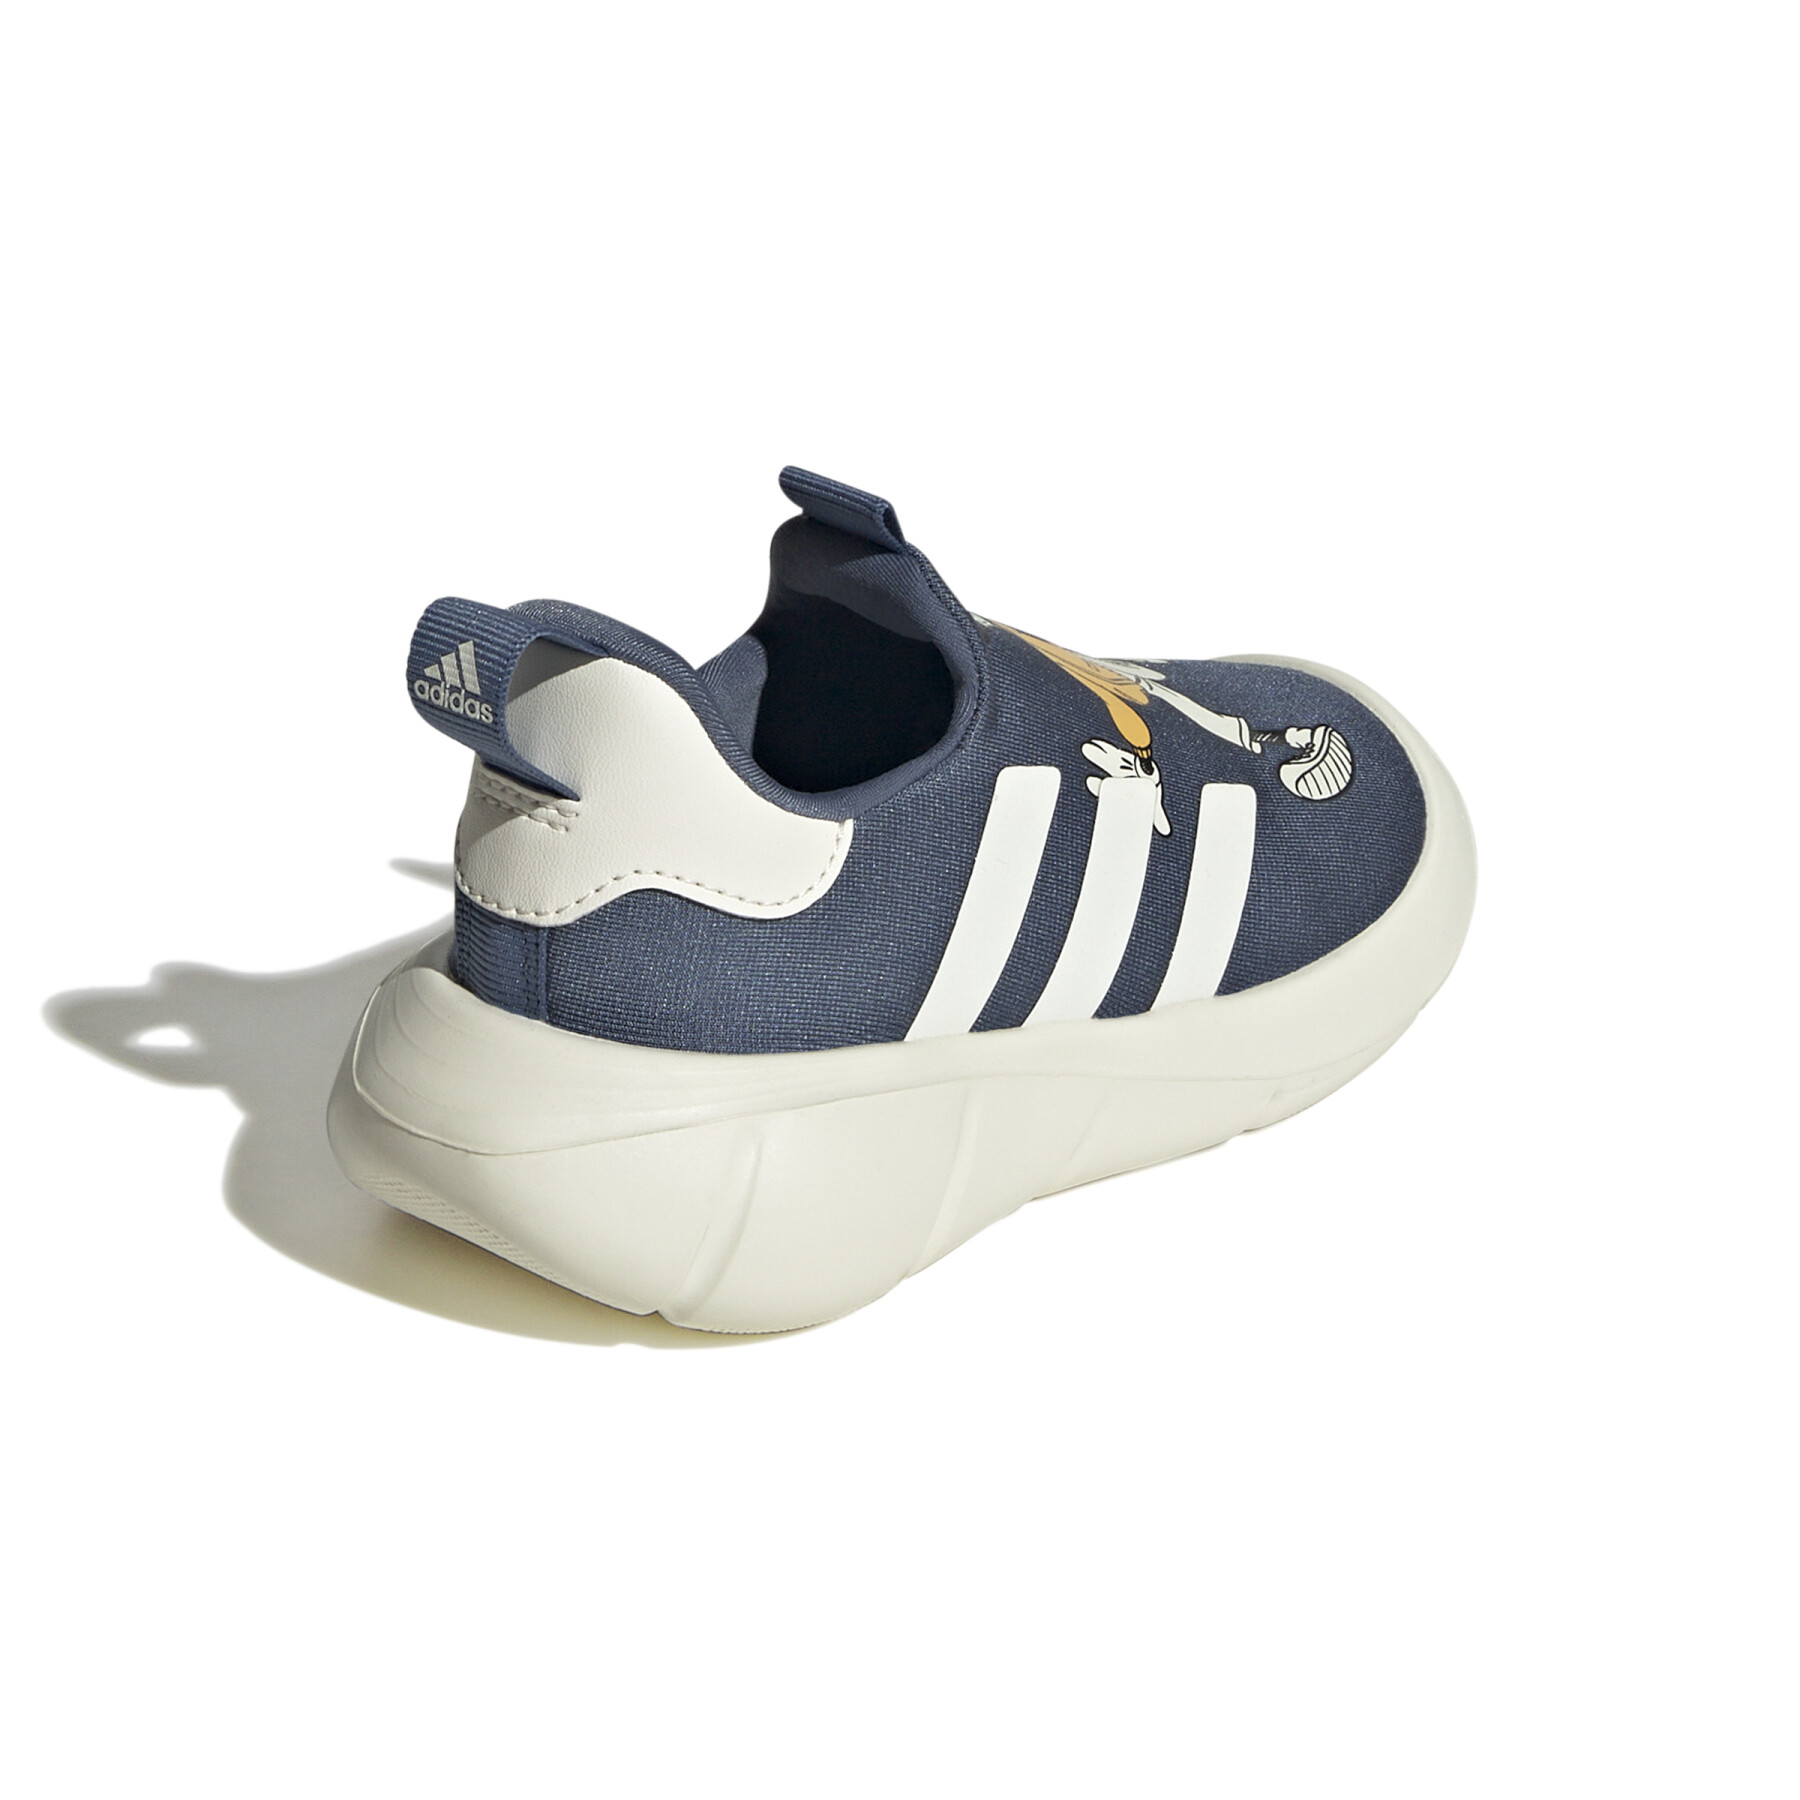 Baby sneakers adidas Monofit x Disney